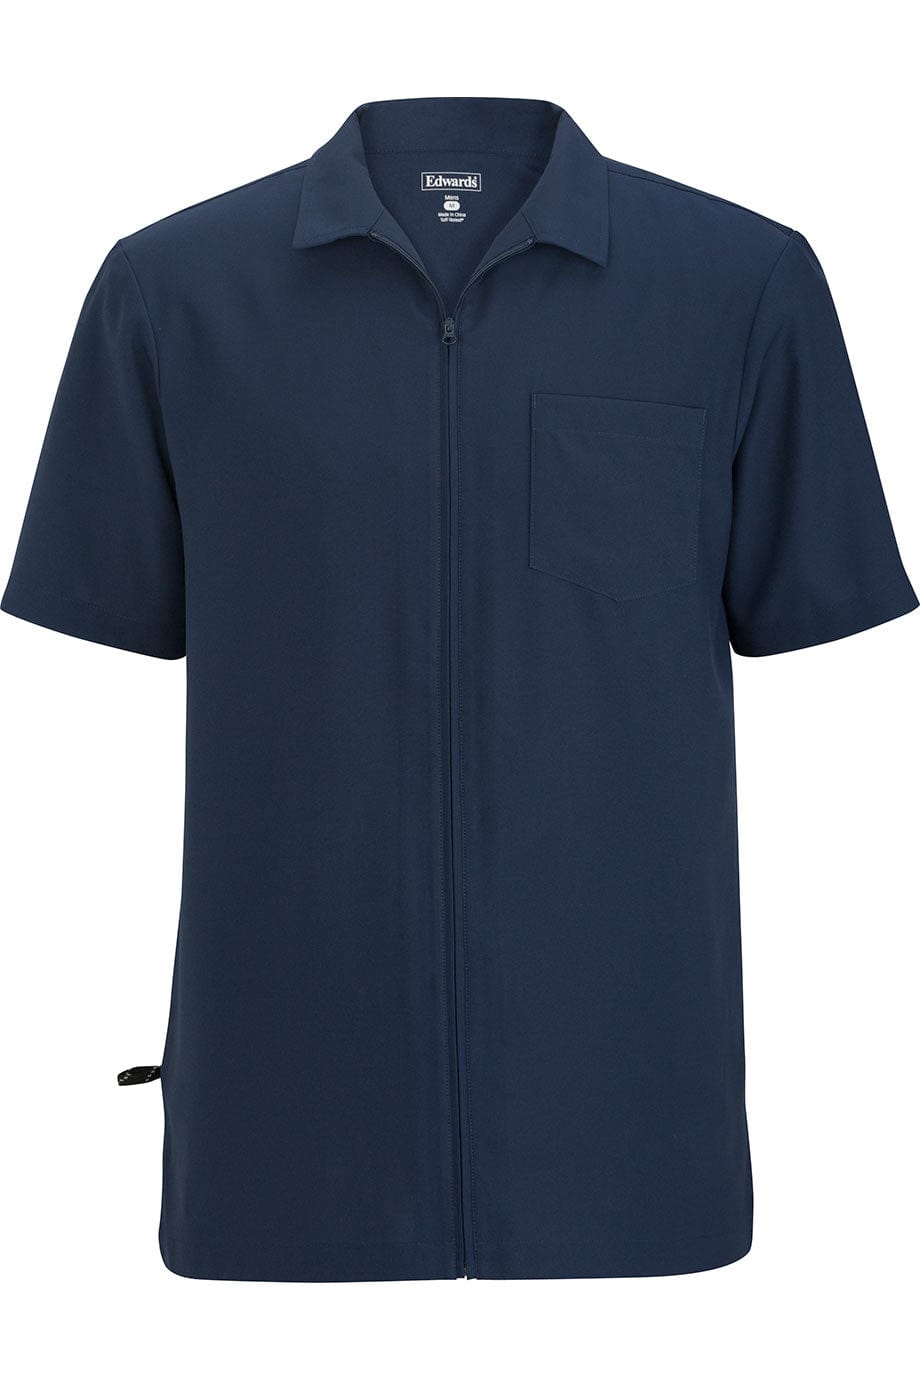 Edwards S Men's Navy Essential Service Shirt